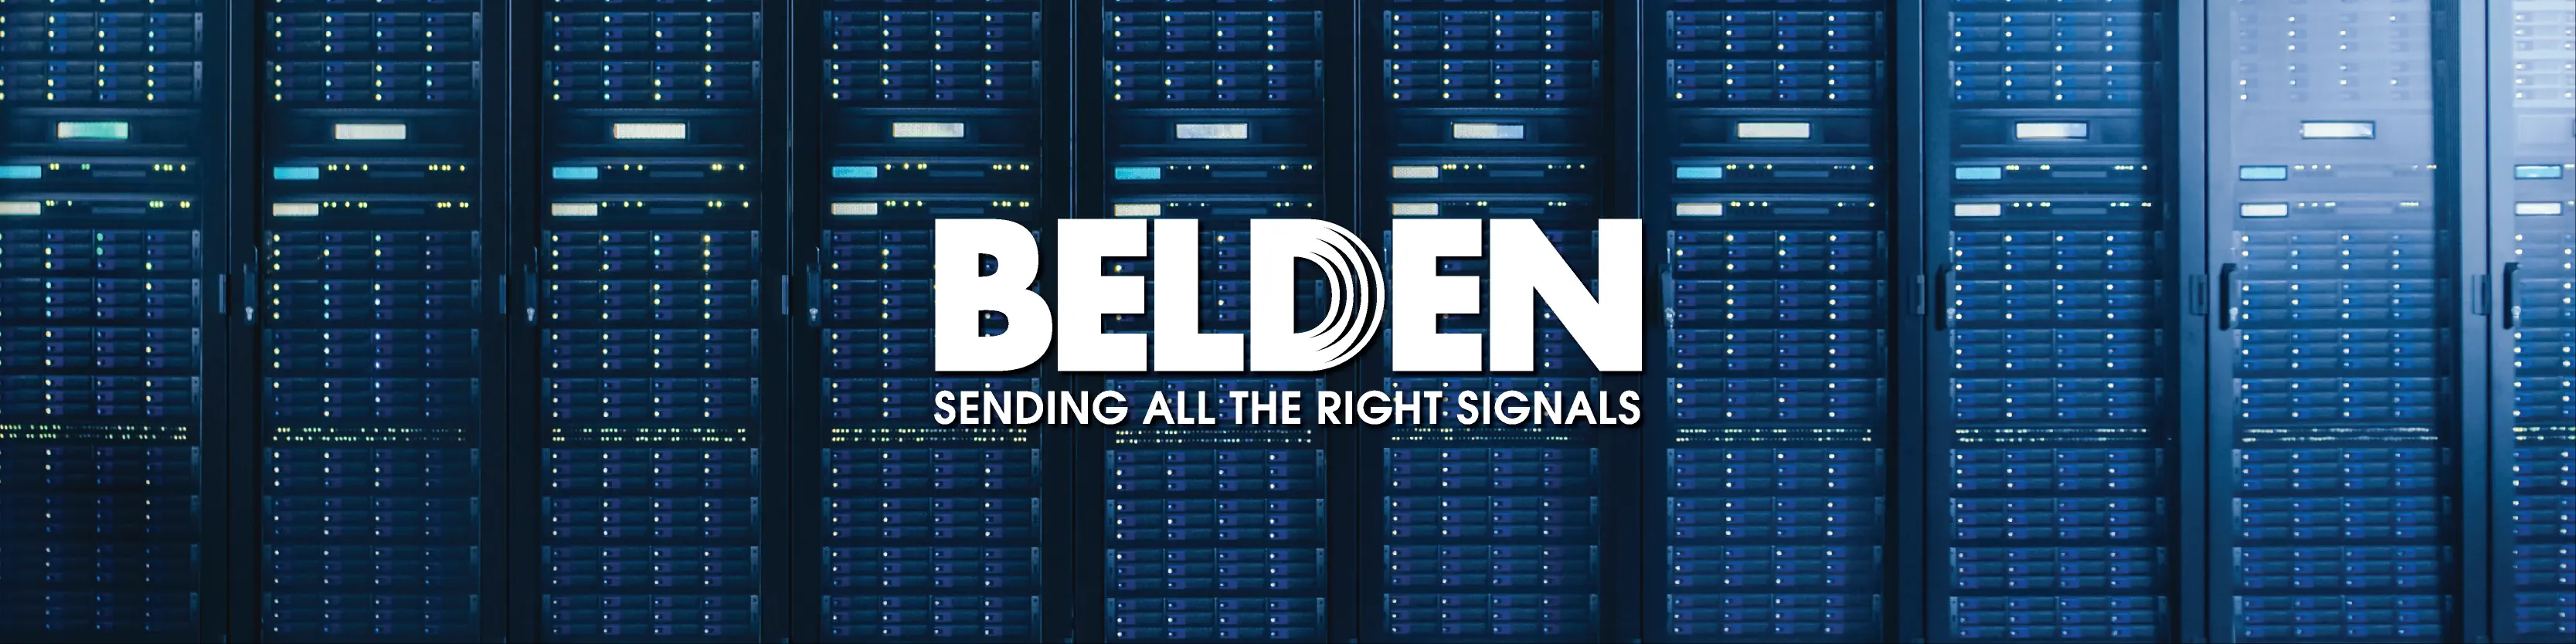 Featured Suppliers Banner Image - Belden V2